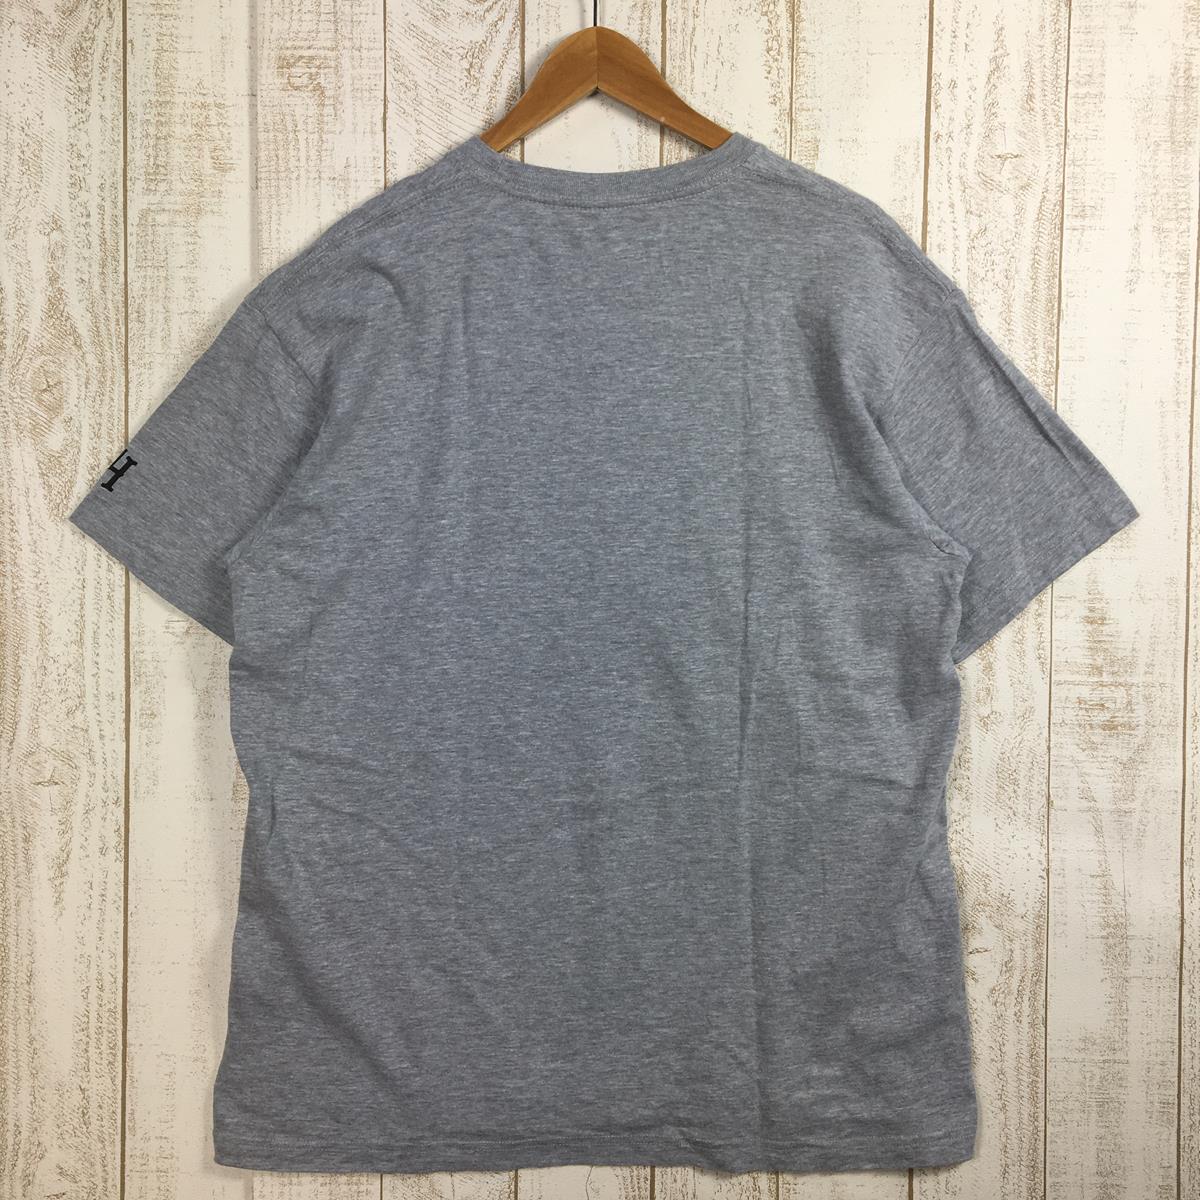 【MEN's XL】 ウルトラヘビー 6.2オンス プレミアム Tシャツ ULTRAHEAVY 6.2oz Premium T-Shirt コットン 生産終了モデル 入手困難 グレー系